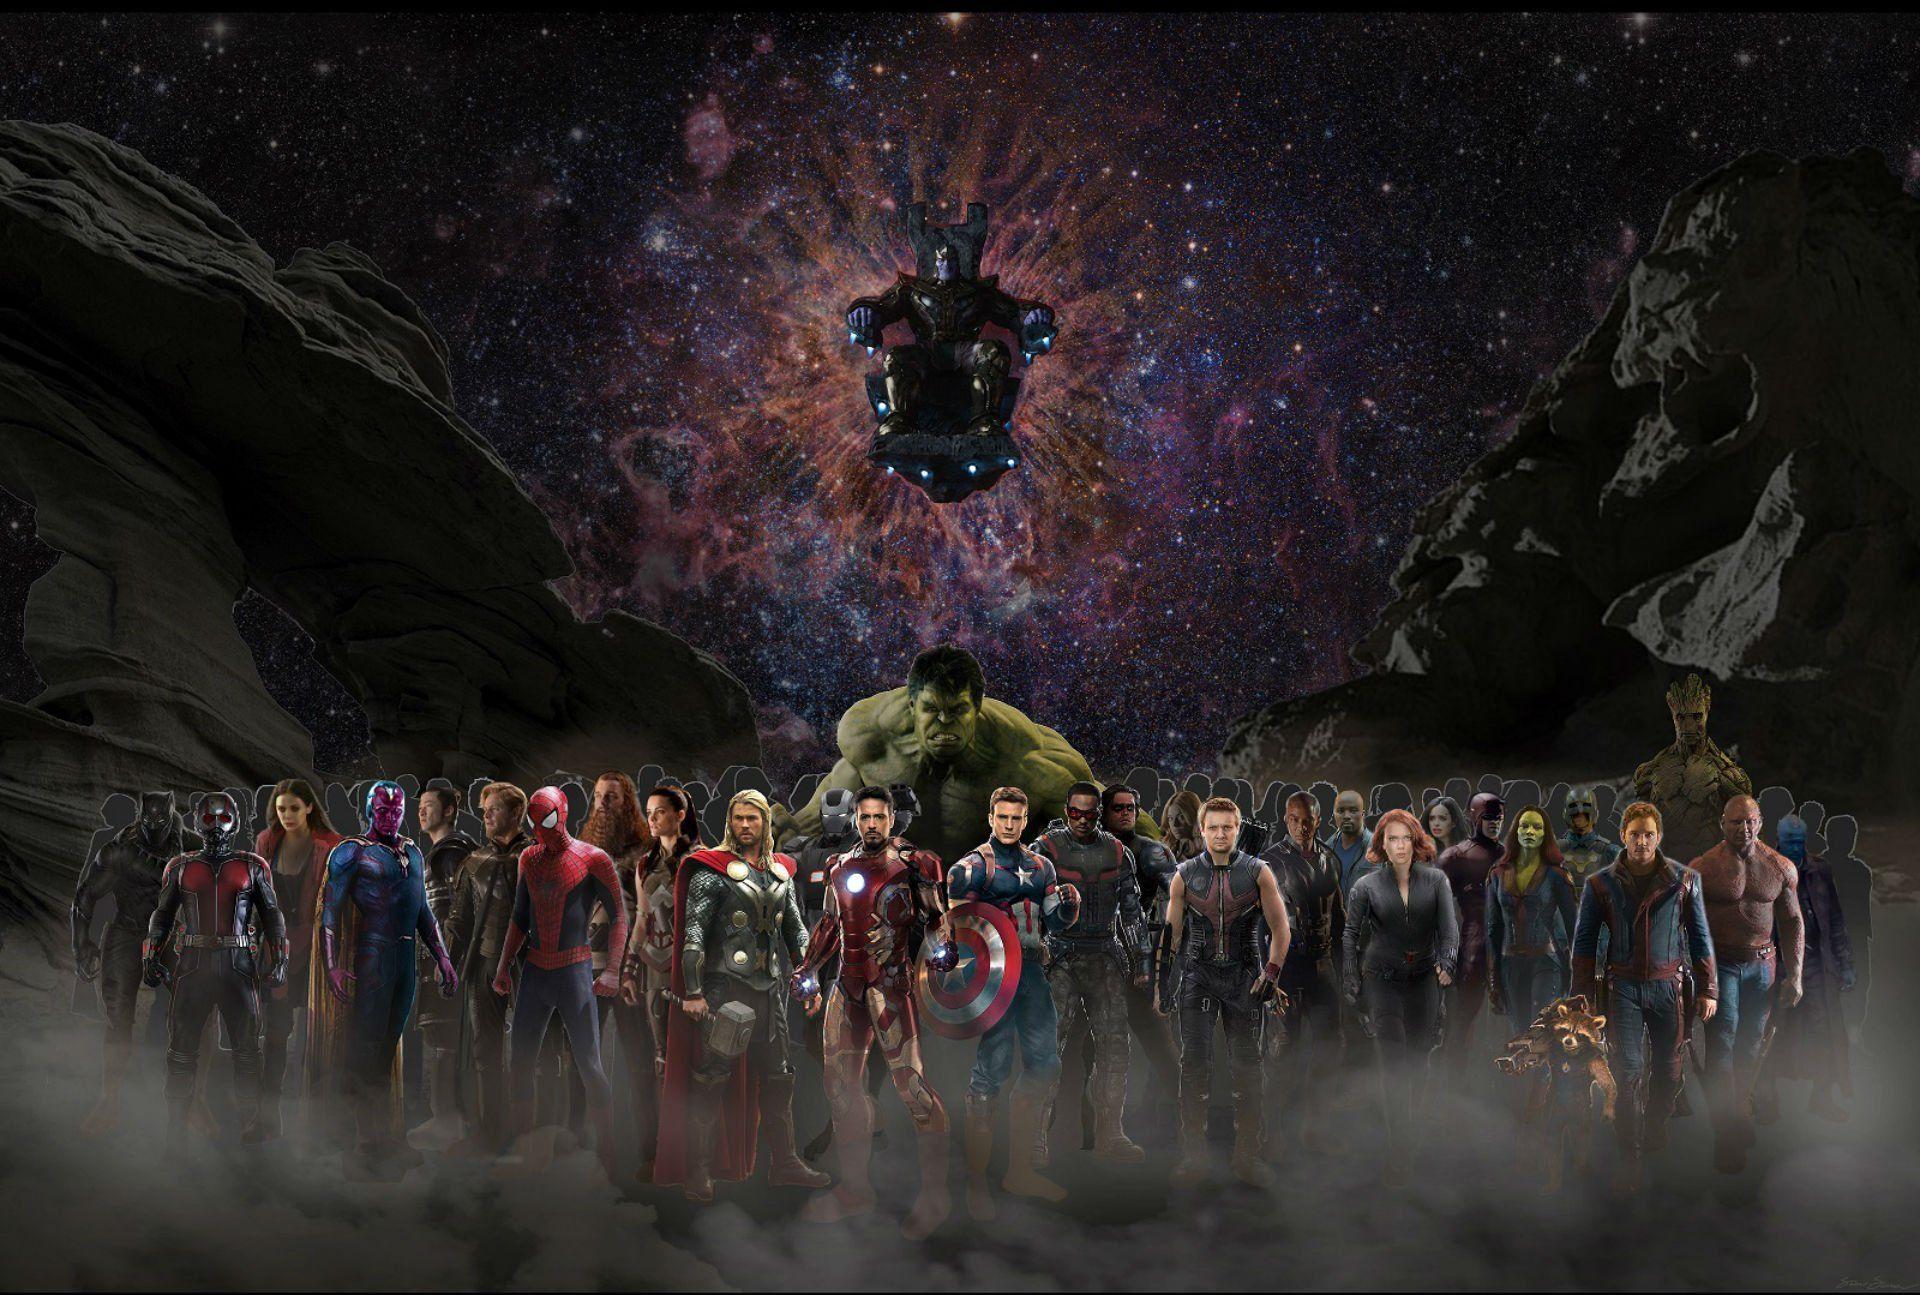 Avengers: Infinity War Movie Wallpaper